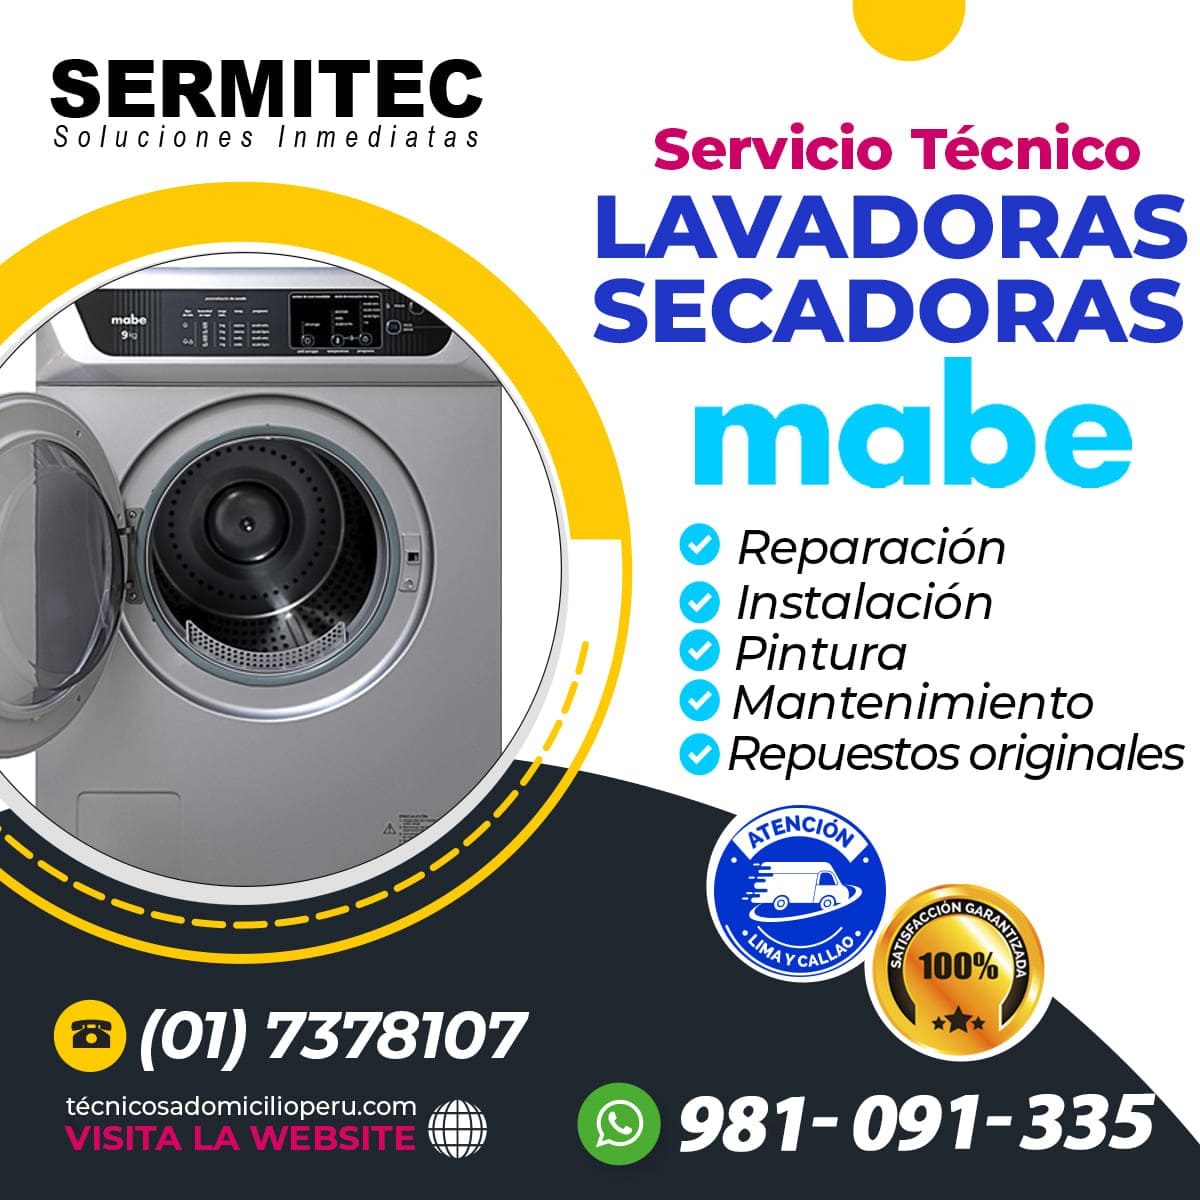 TECNICOS de LAVADORAS MABE |Servicio con garantía en SAN MARTIN DE PORRES  7378107